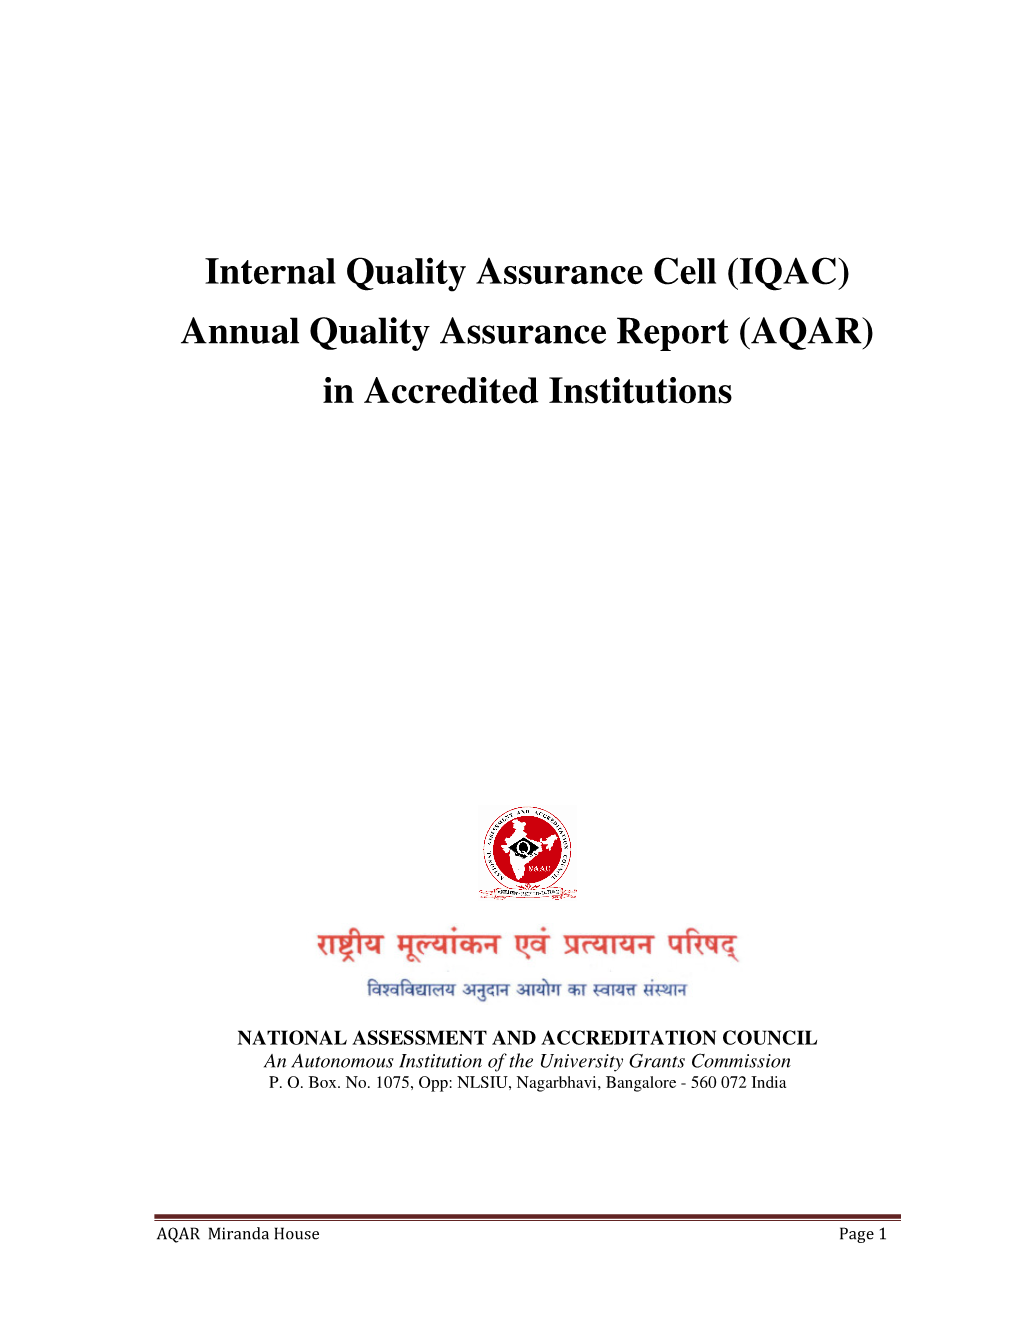 IQAC) Annual Quality Assurance Report (AQAR